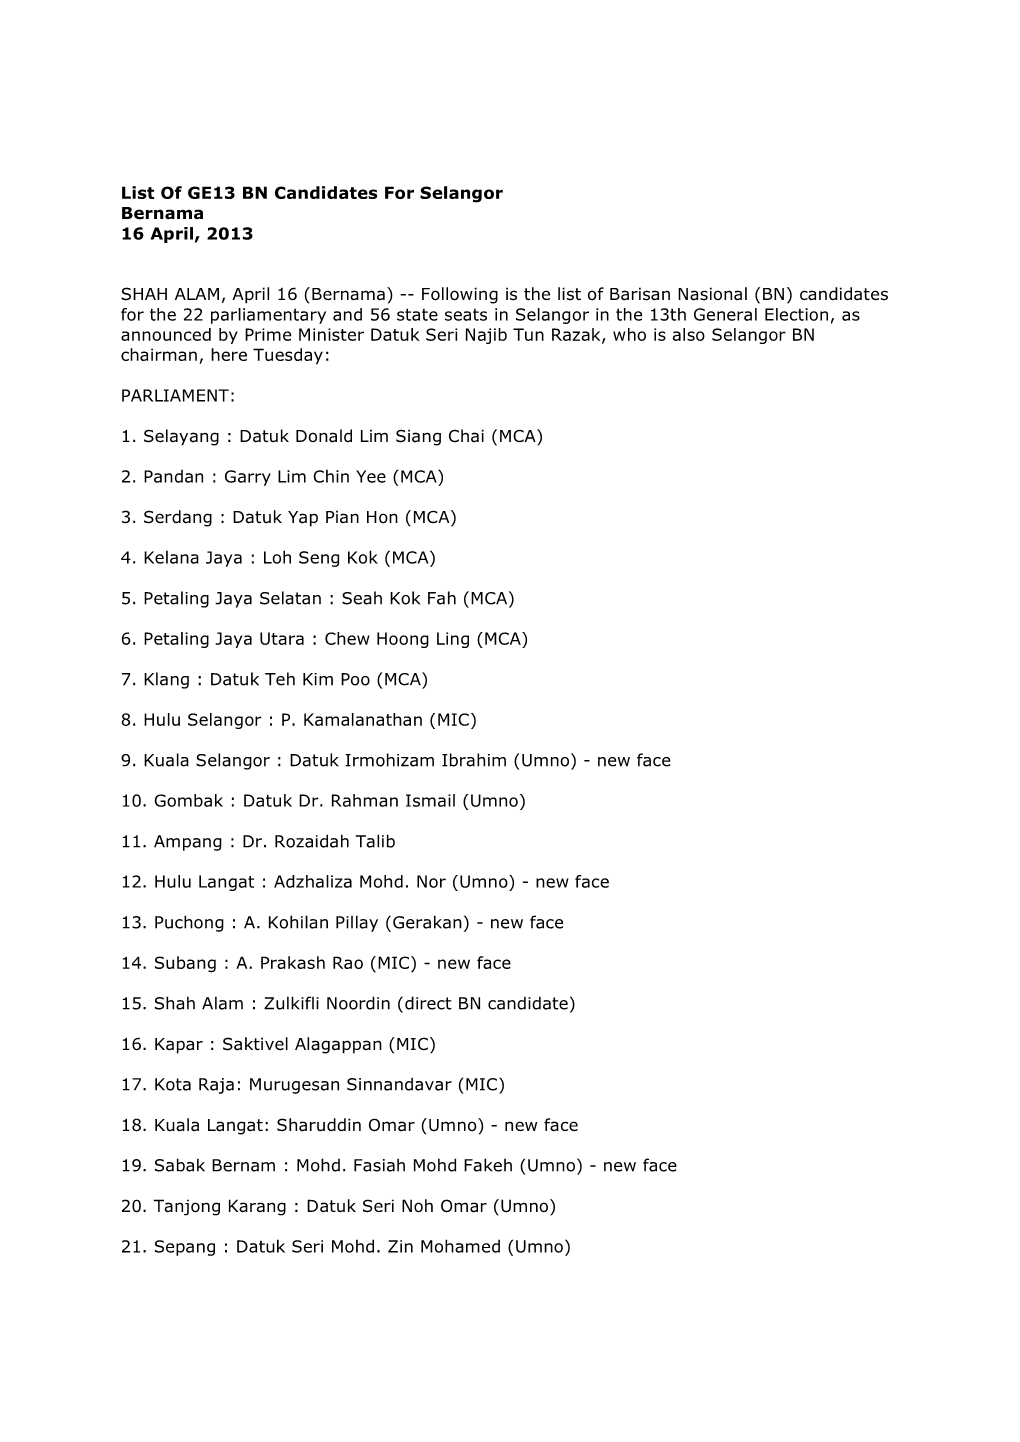 List of GE13 BN Candidates for Selangor Bernama 16 April, 2013